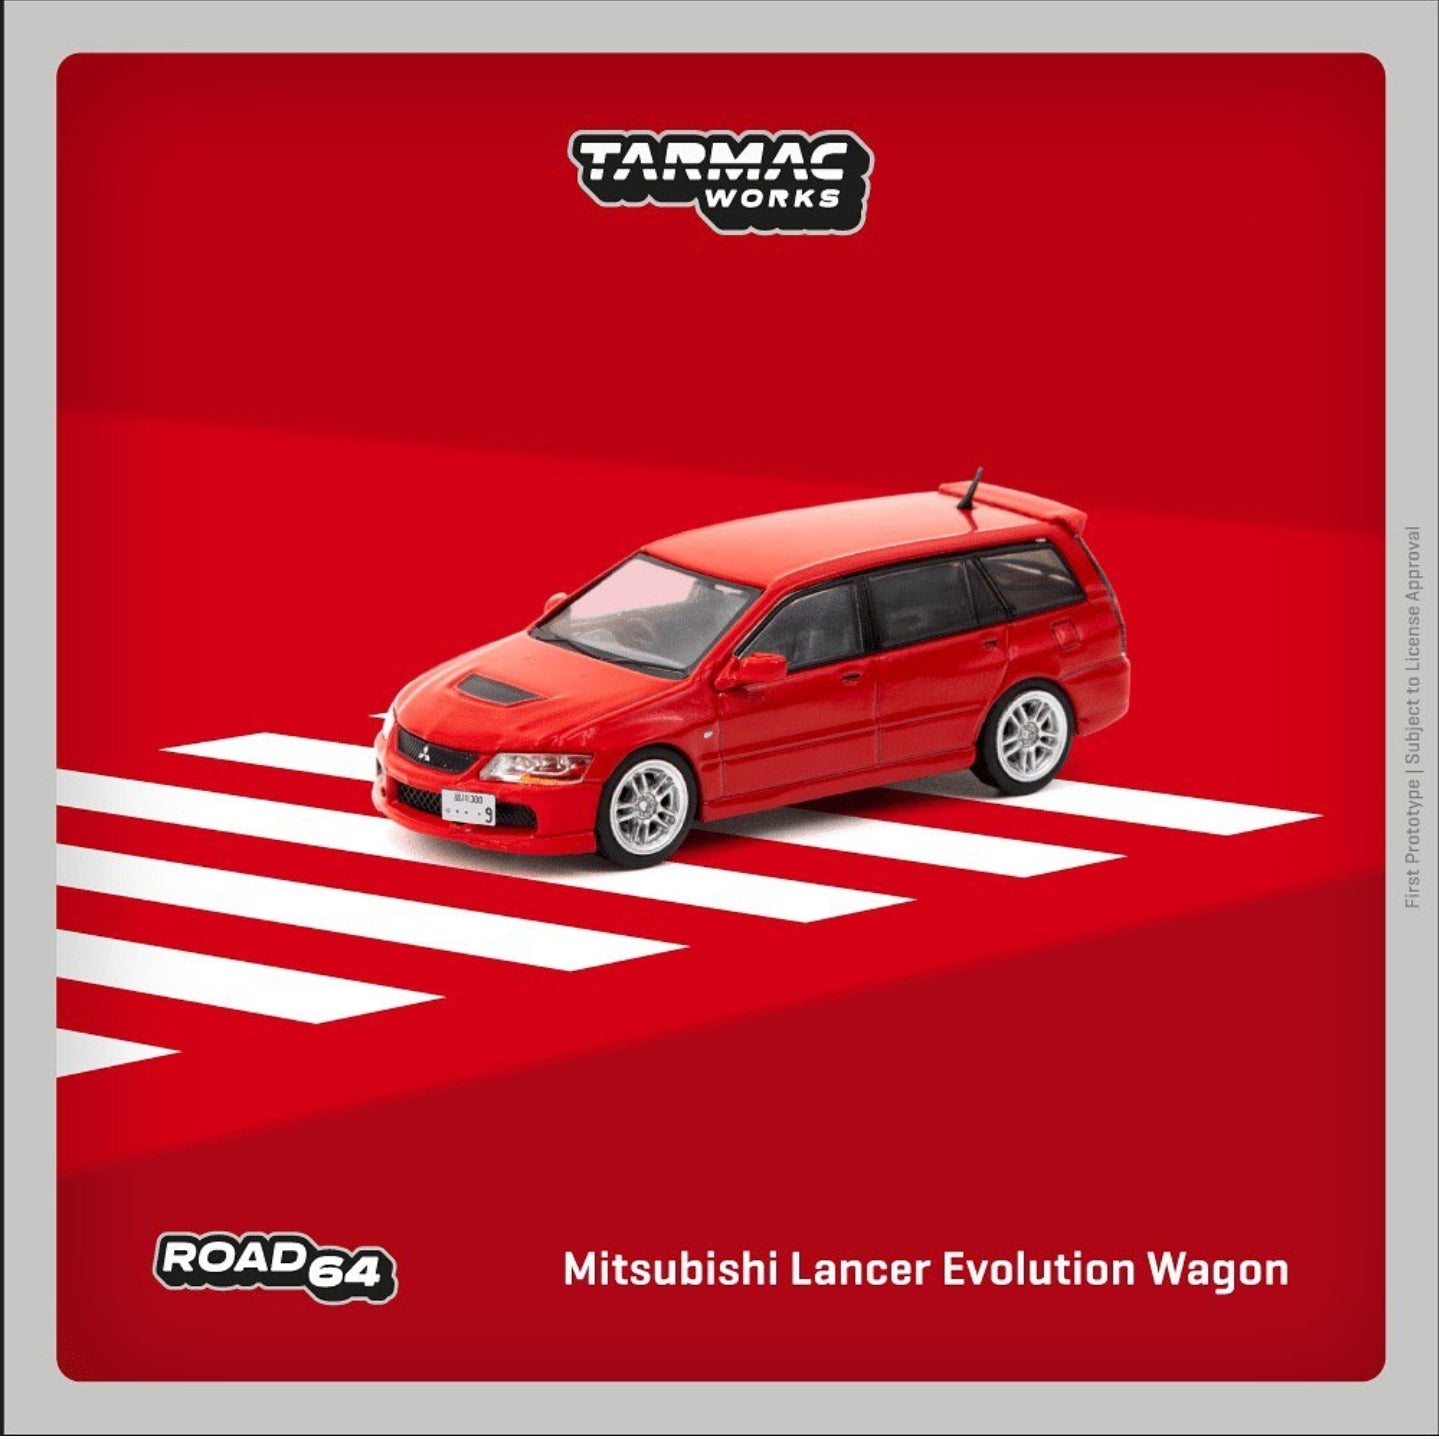 (Pre-order) Tarmac Works 1:64  Mitsubishi Lancer Evo Wagon – Red –Road64 – MiJo Exclusives